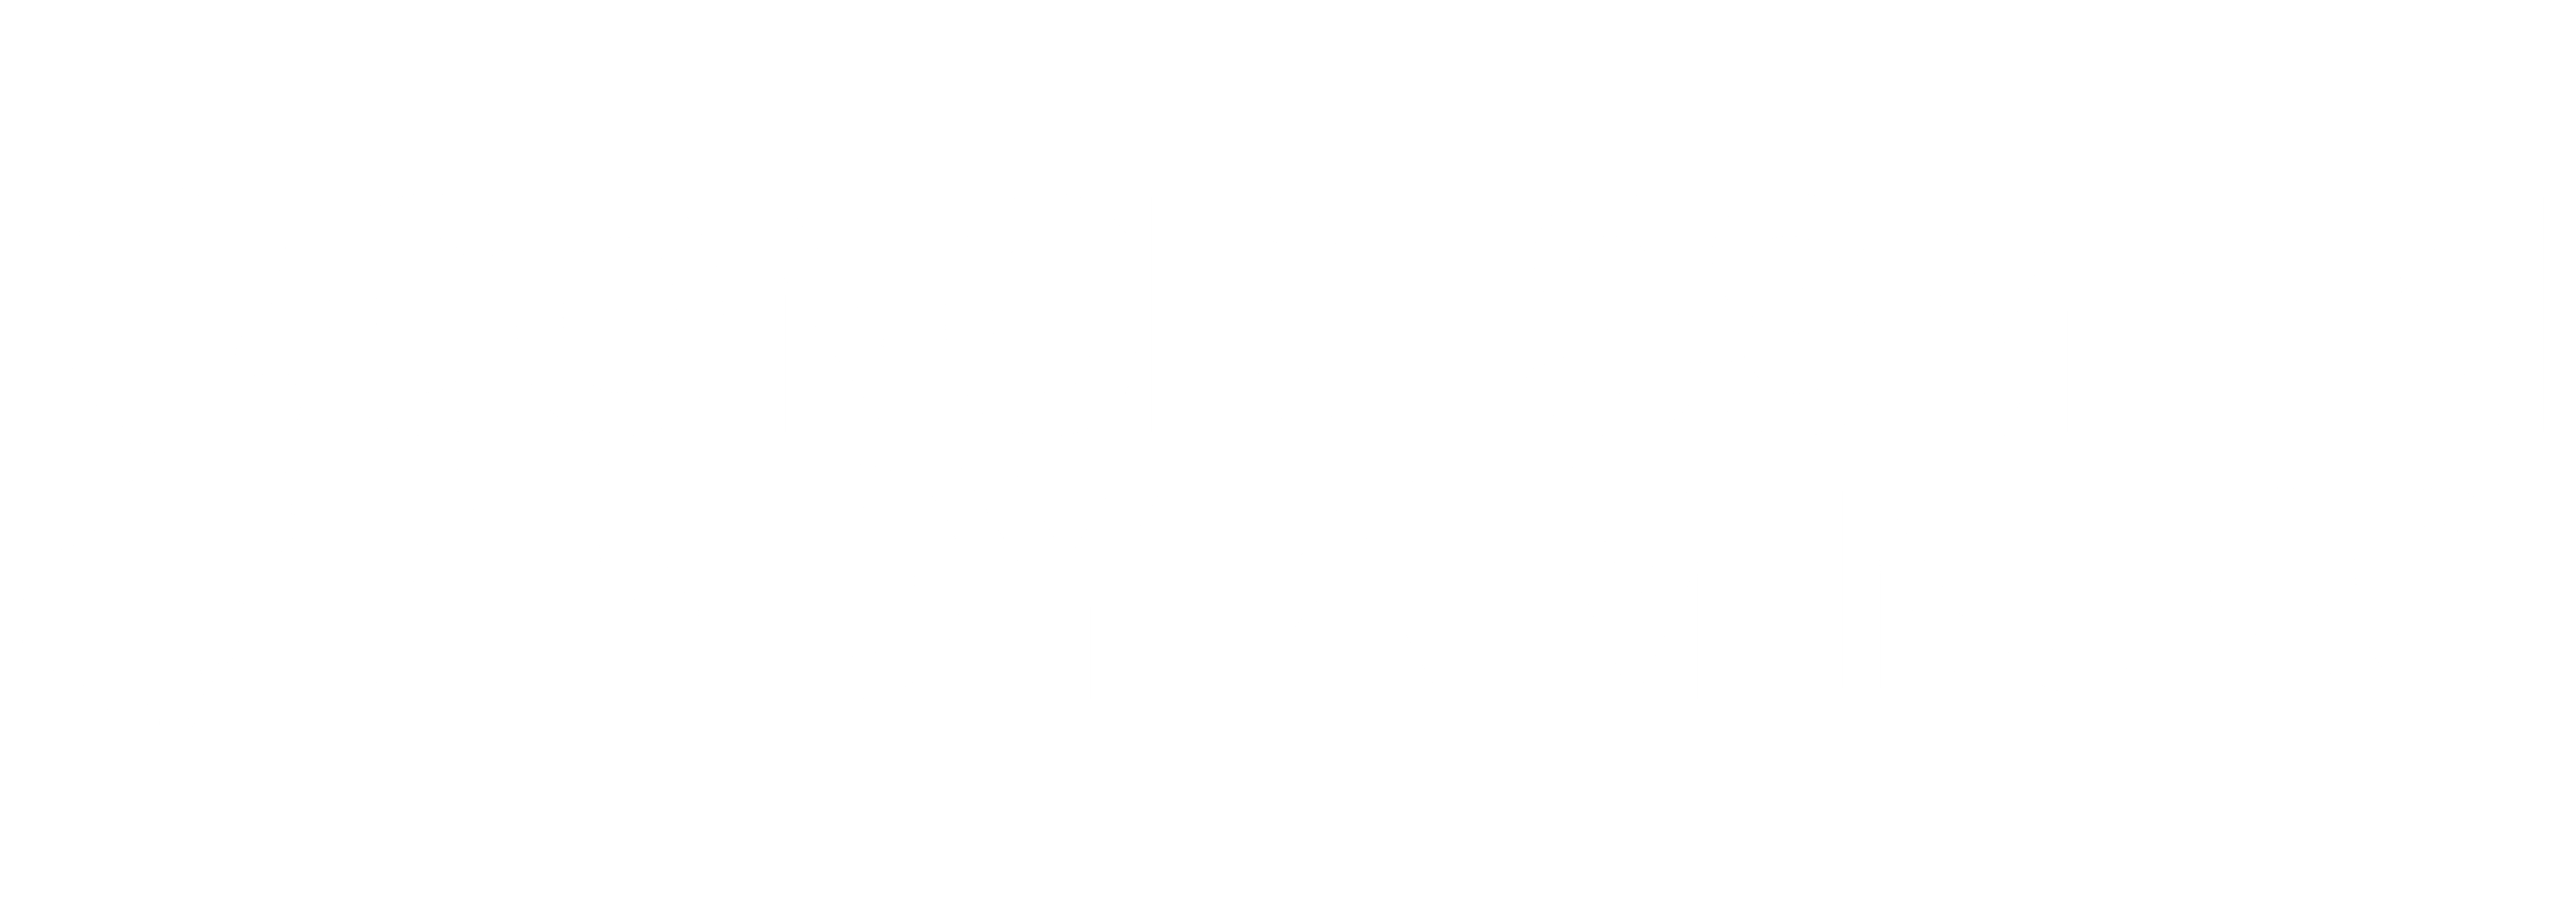 Representative Andy Kim  logo